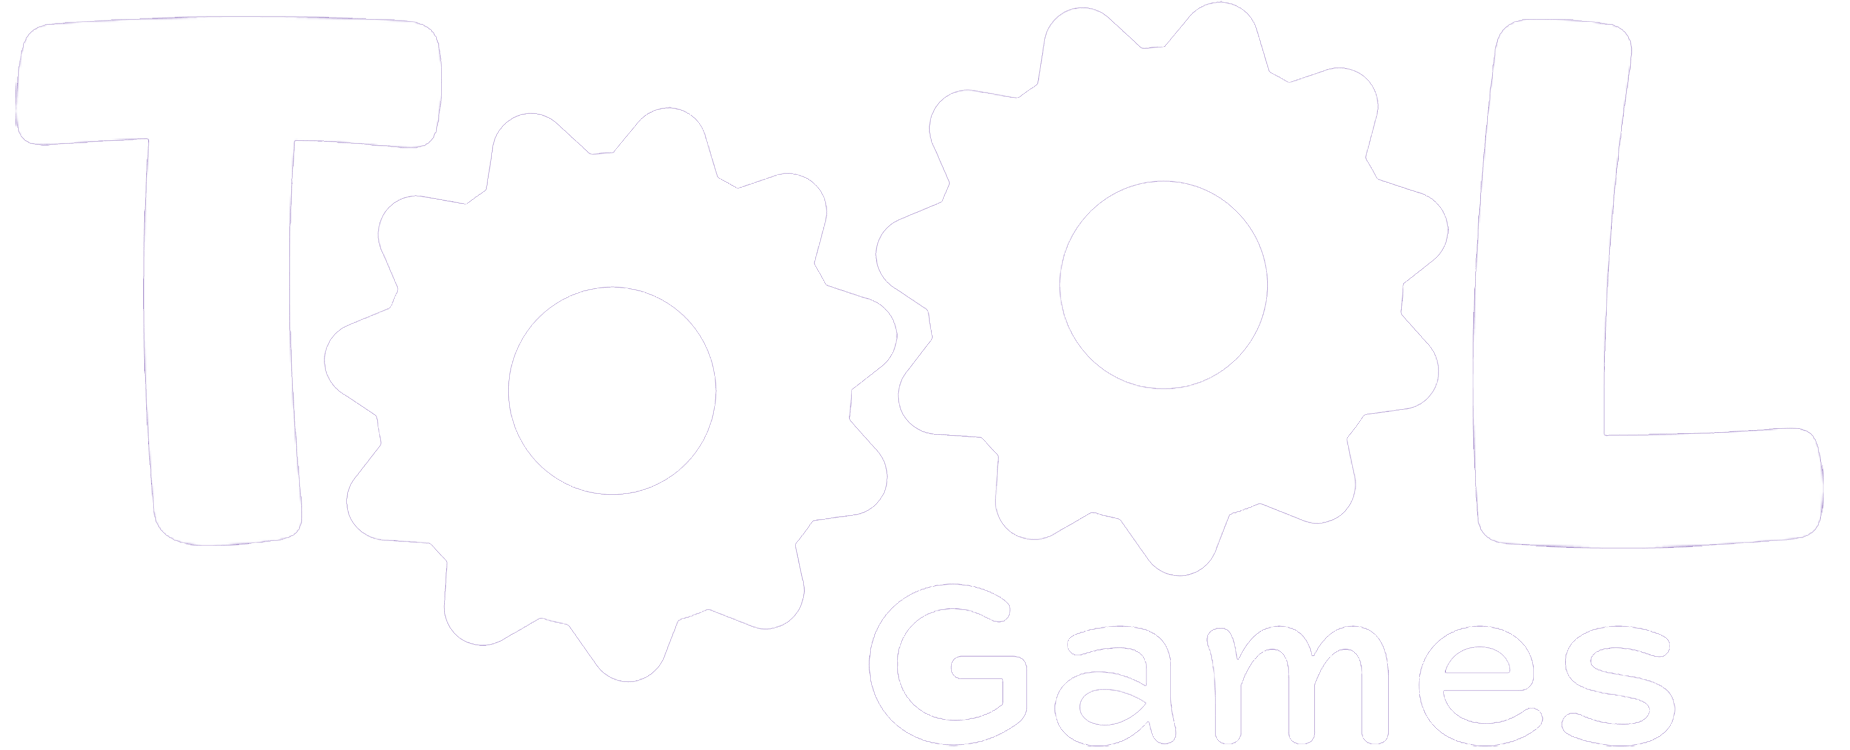 tool games brand logo